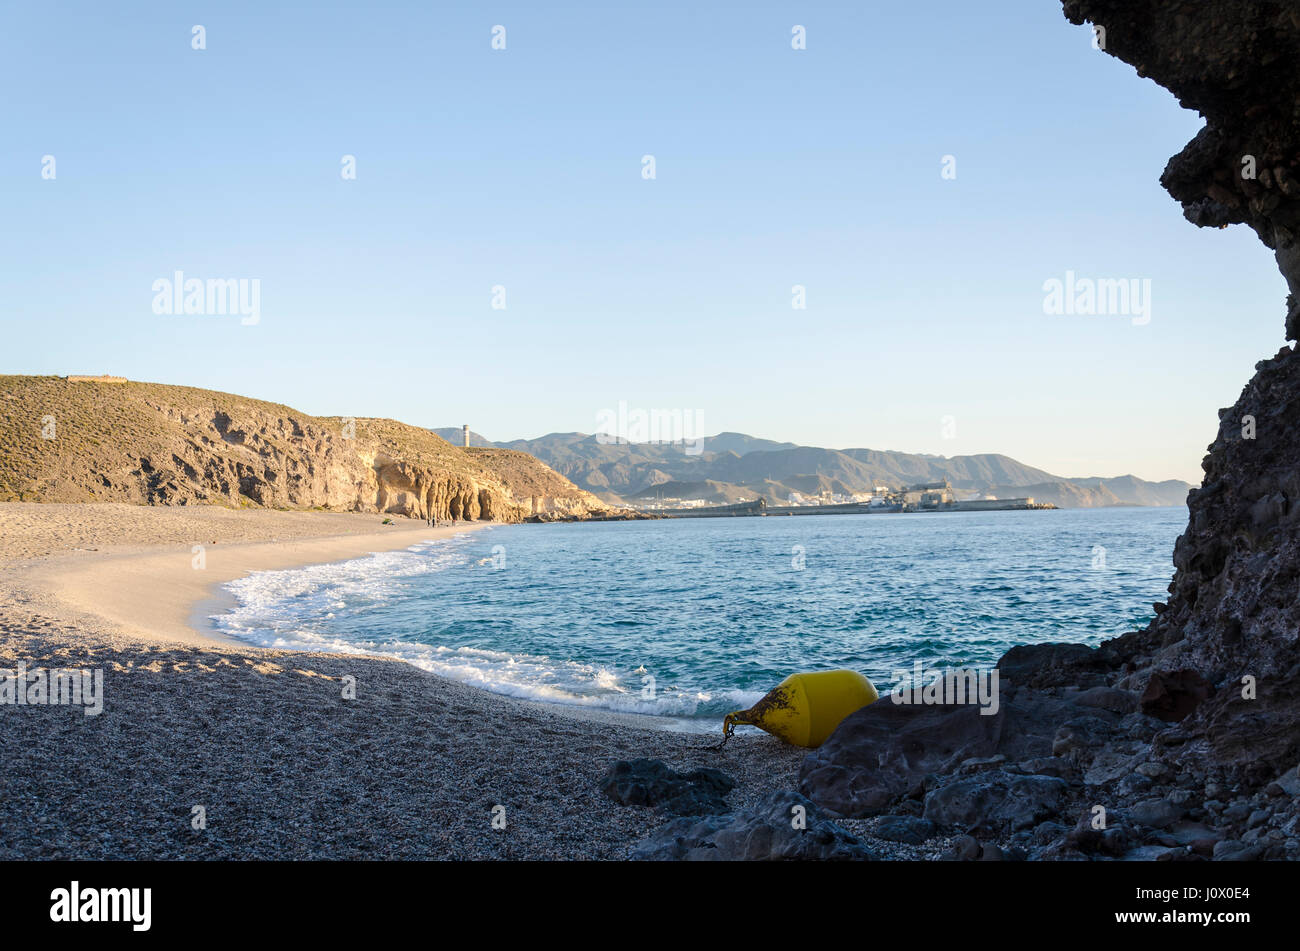 A view of a Dead beach, Almería province, Spain. Stock Photo